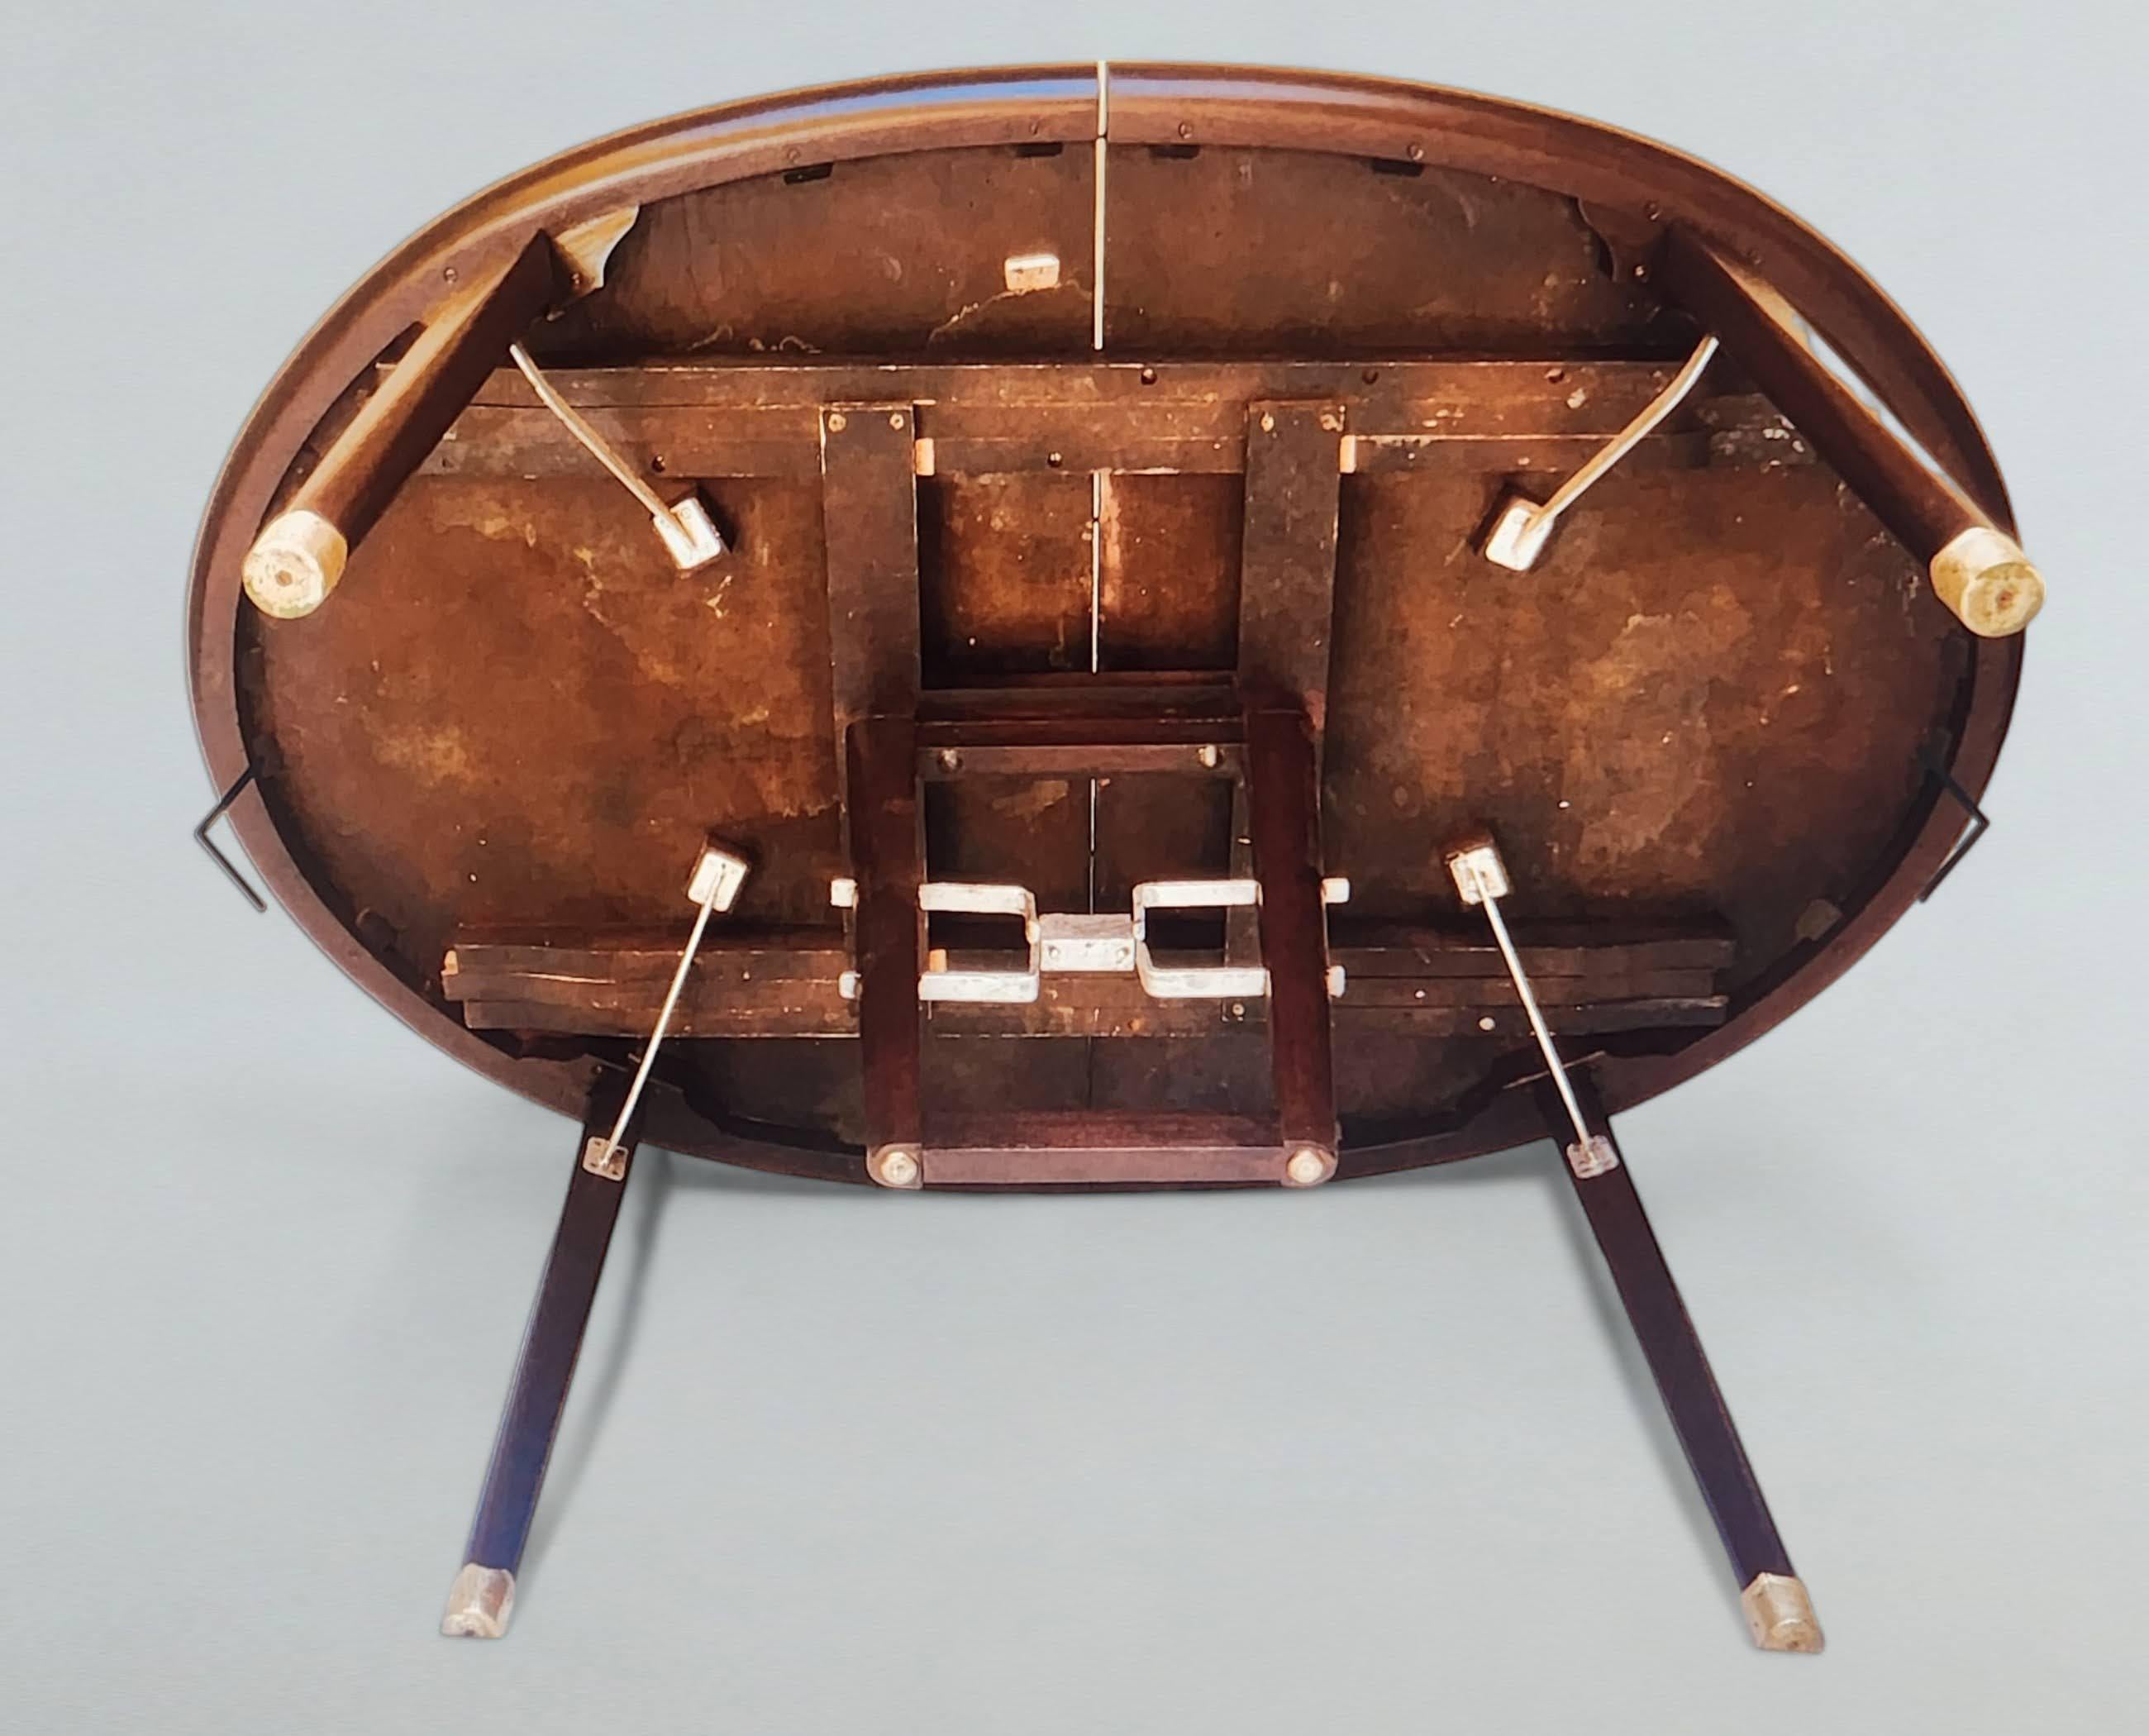 Gilt Edmond Spence Mahogany Dining Table Designed for Industria Mueblera, circa 1958 For Sale